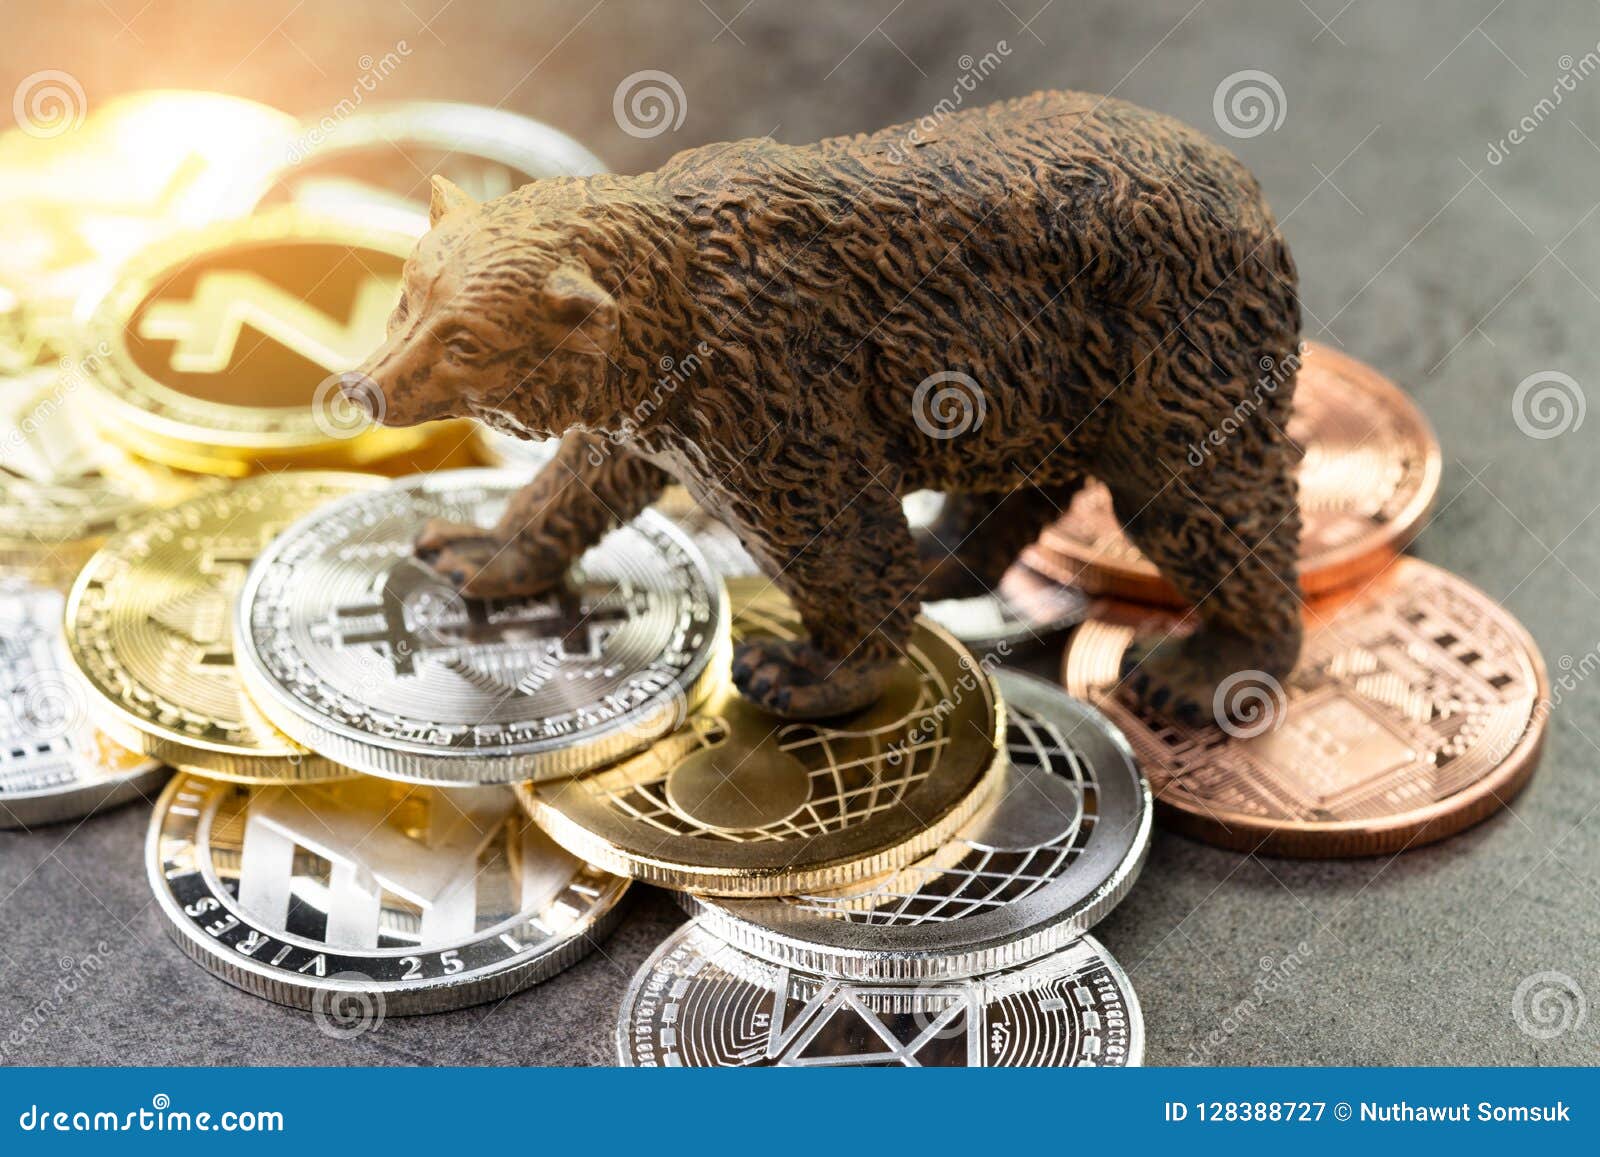 day trading crypto in a bear market